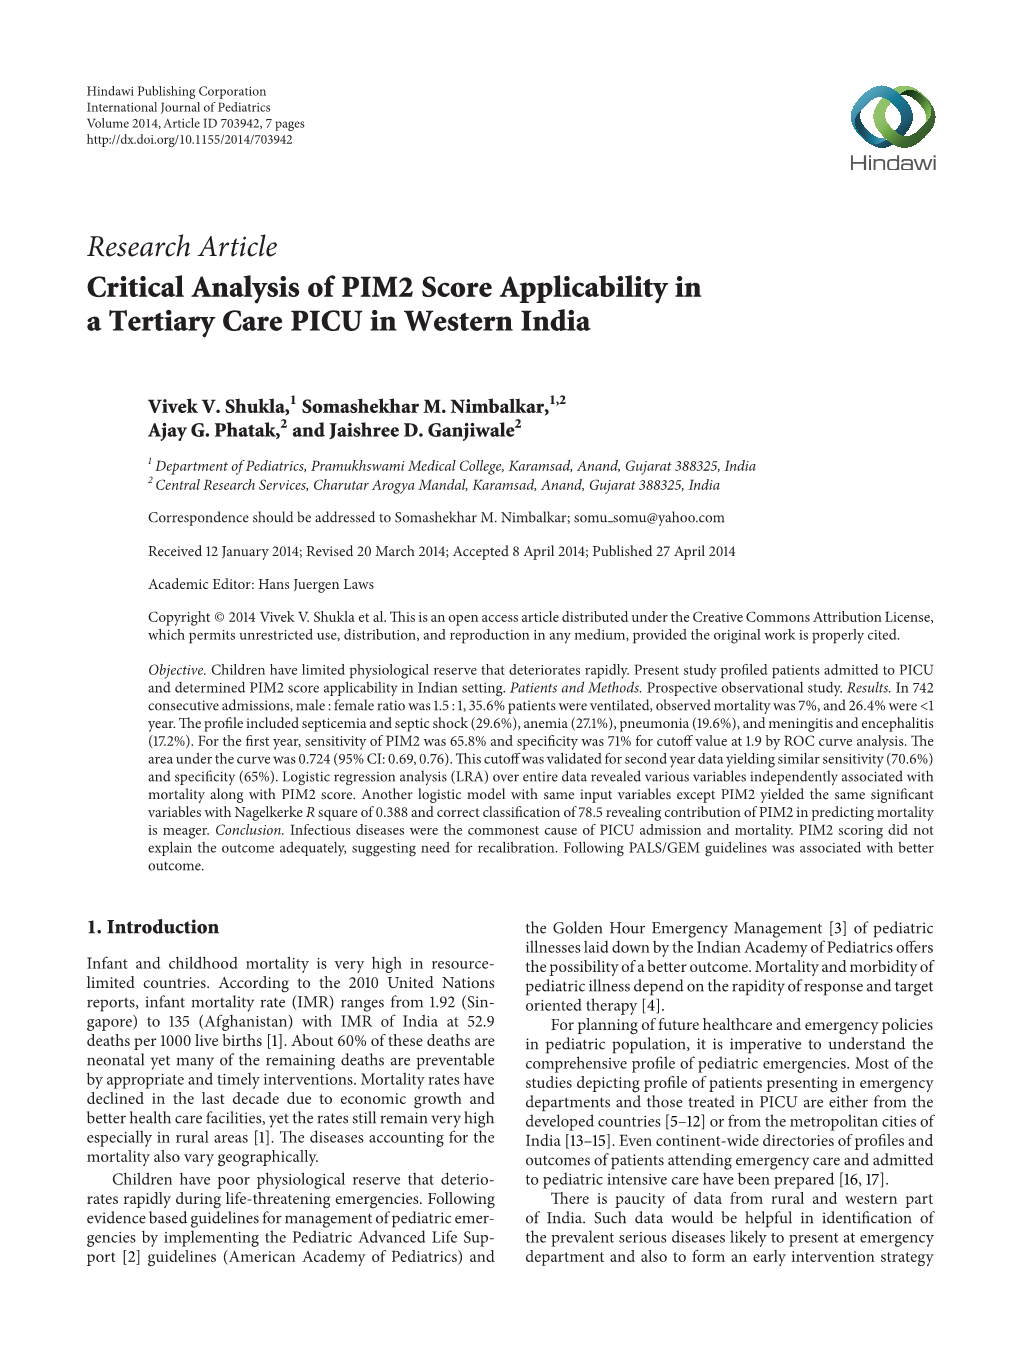 Critical Analysis of PIM2 Score Applicability in a Tertiary Care PICU in Western India